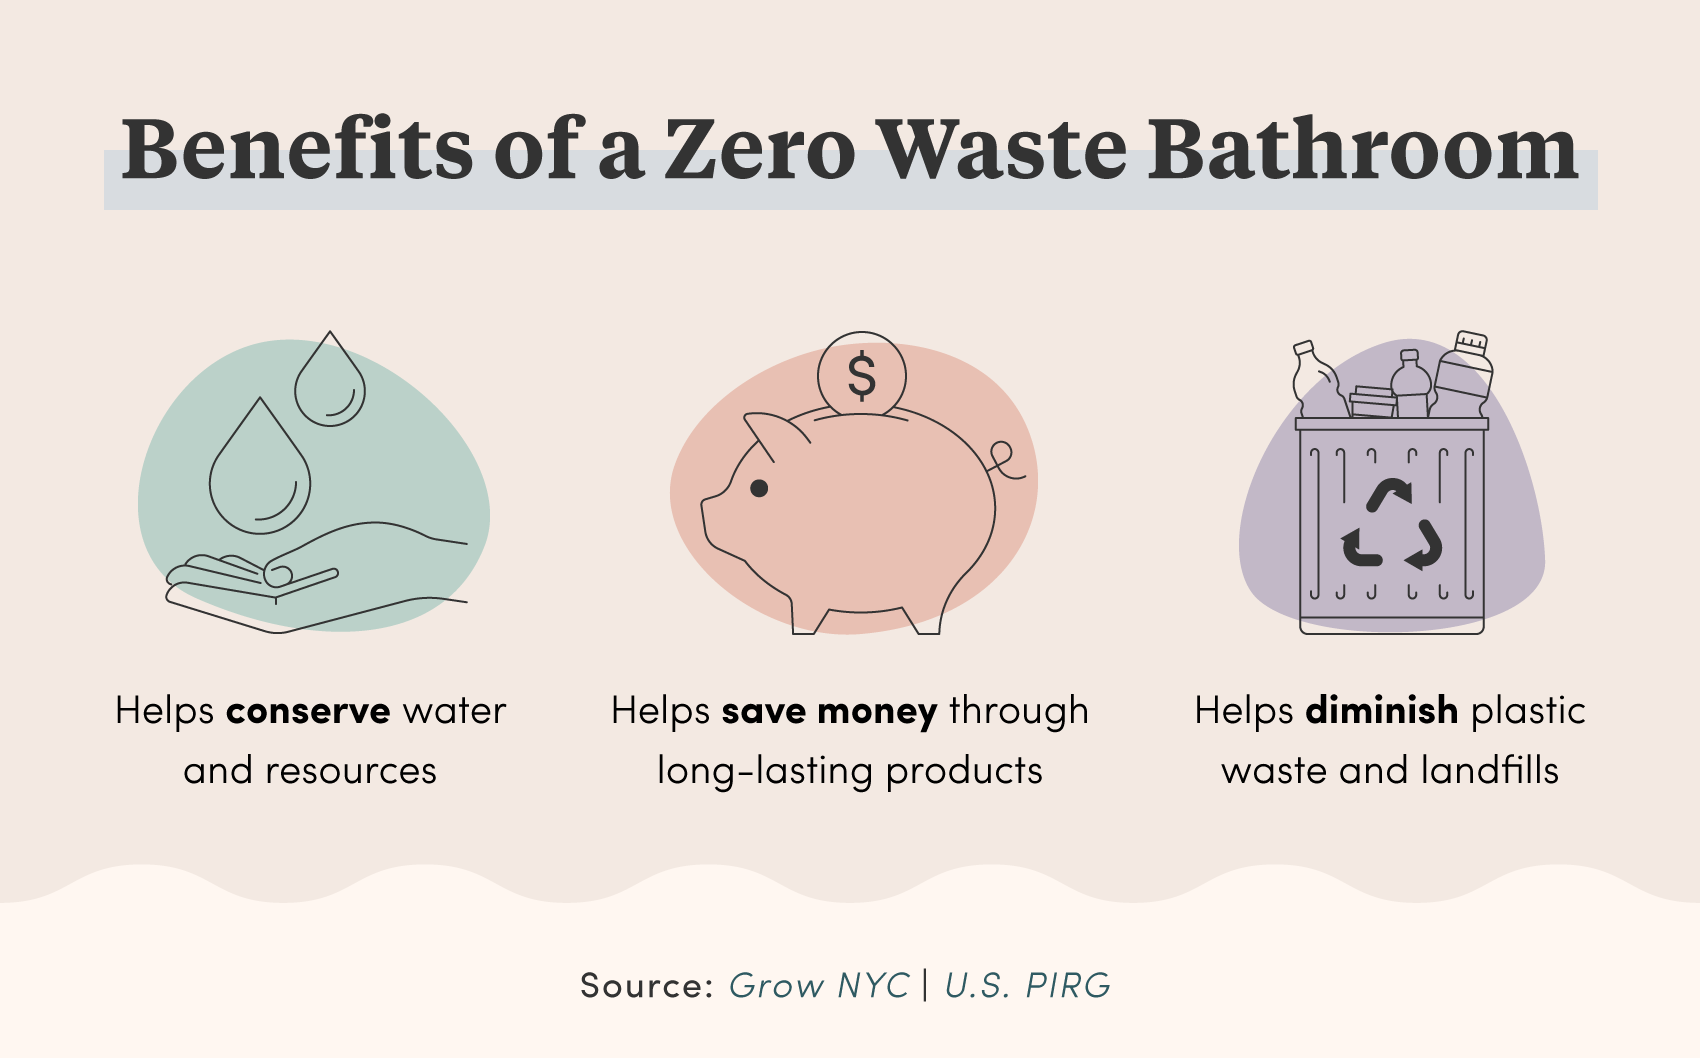 Benefits of a Zero Waste Bathroom